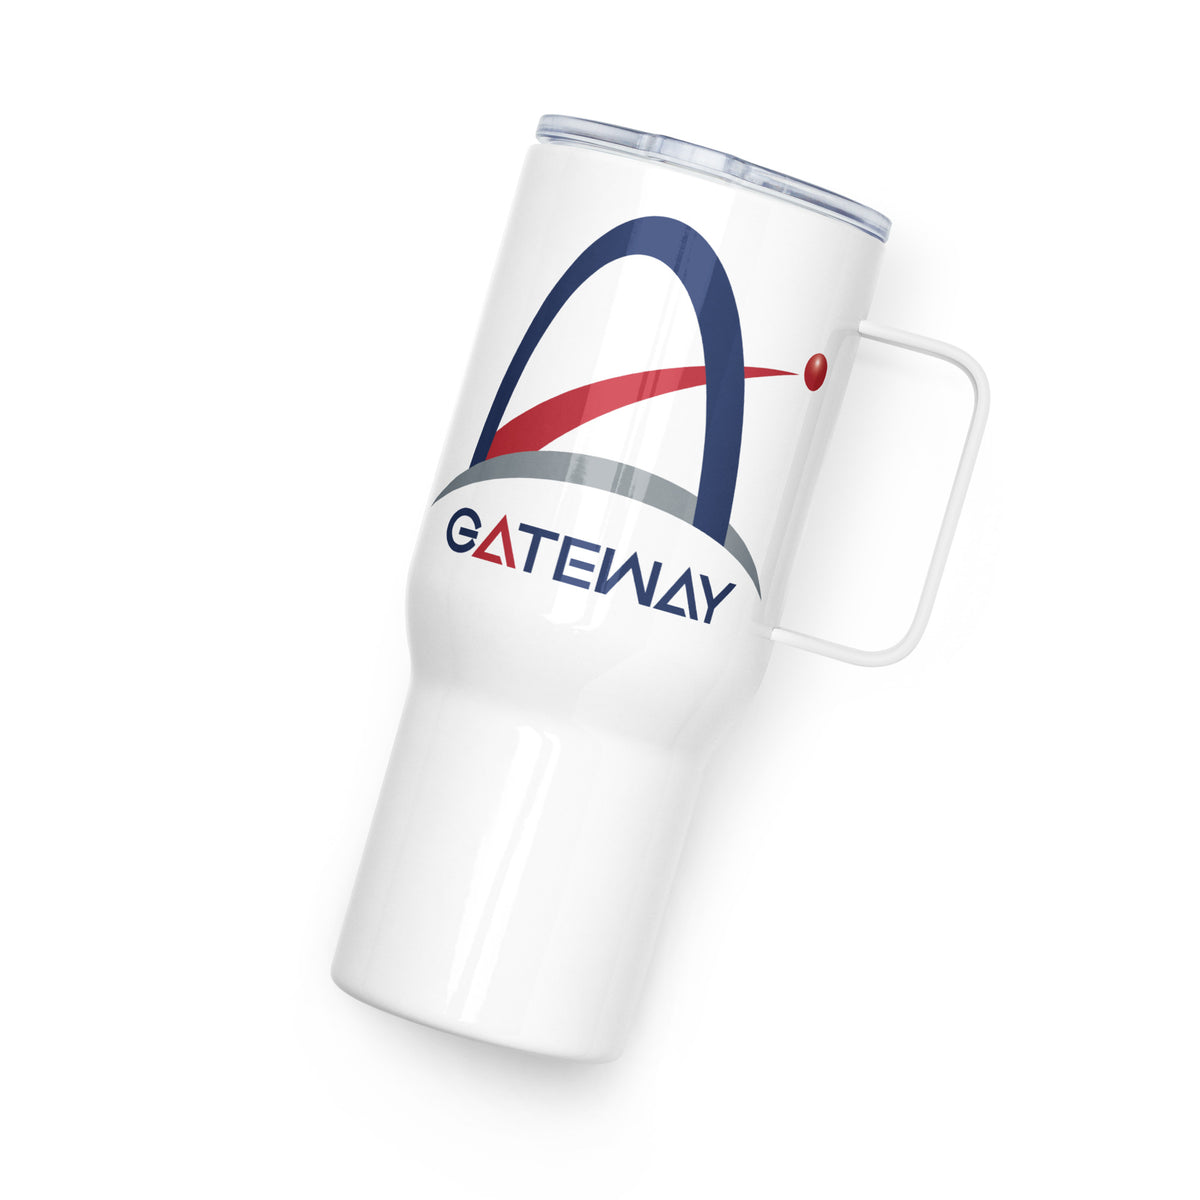 Gateway Travel mug with a handle